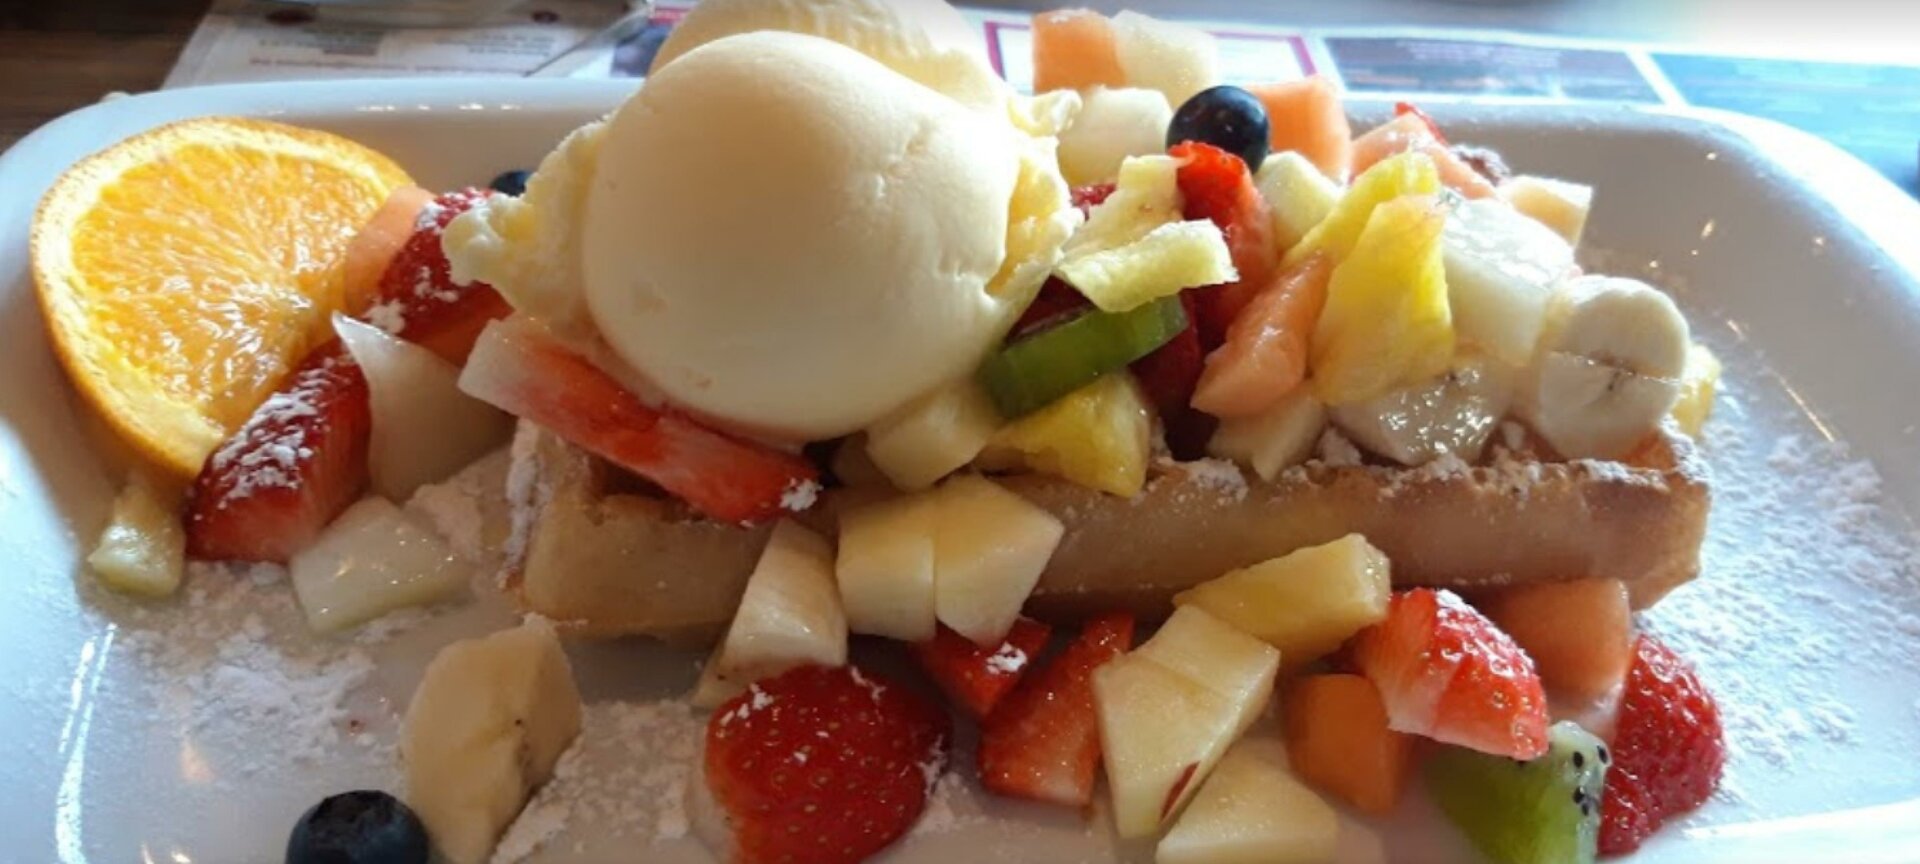 Trammelant - wafel met ijs en vers fruit